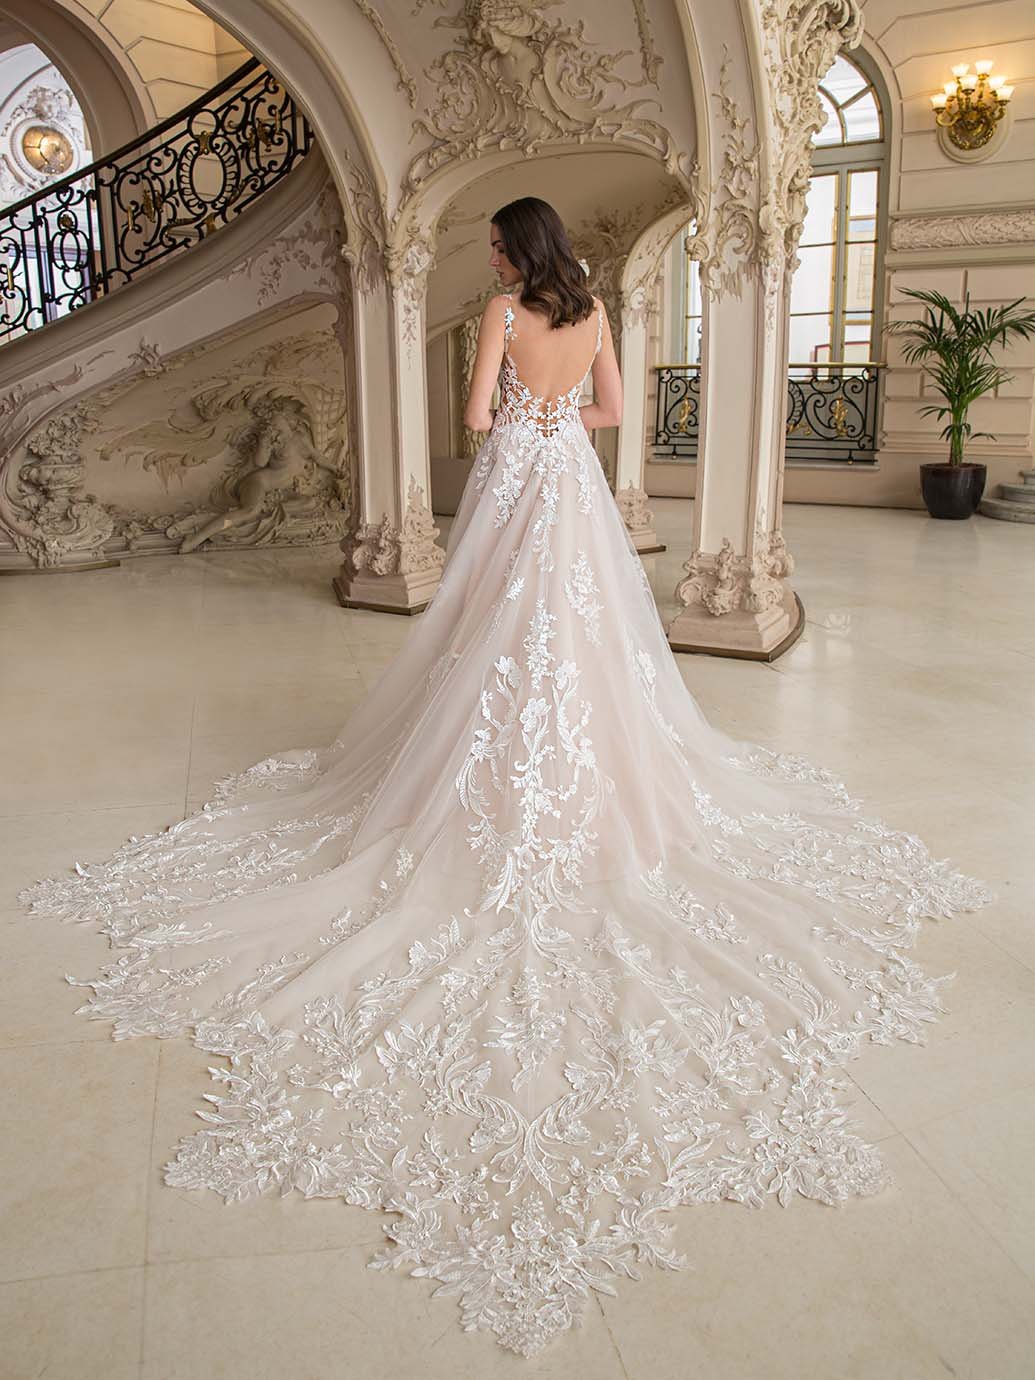 blanc-de-blanc-bridal-boutique-cleveland-dress-wedding-gown-elysee-laurent.jpg.jpg